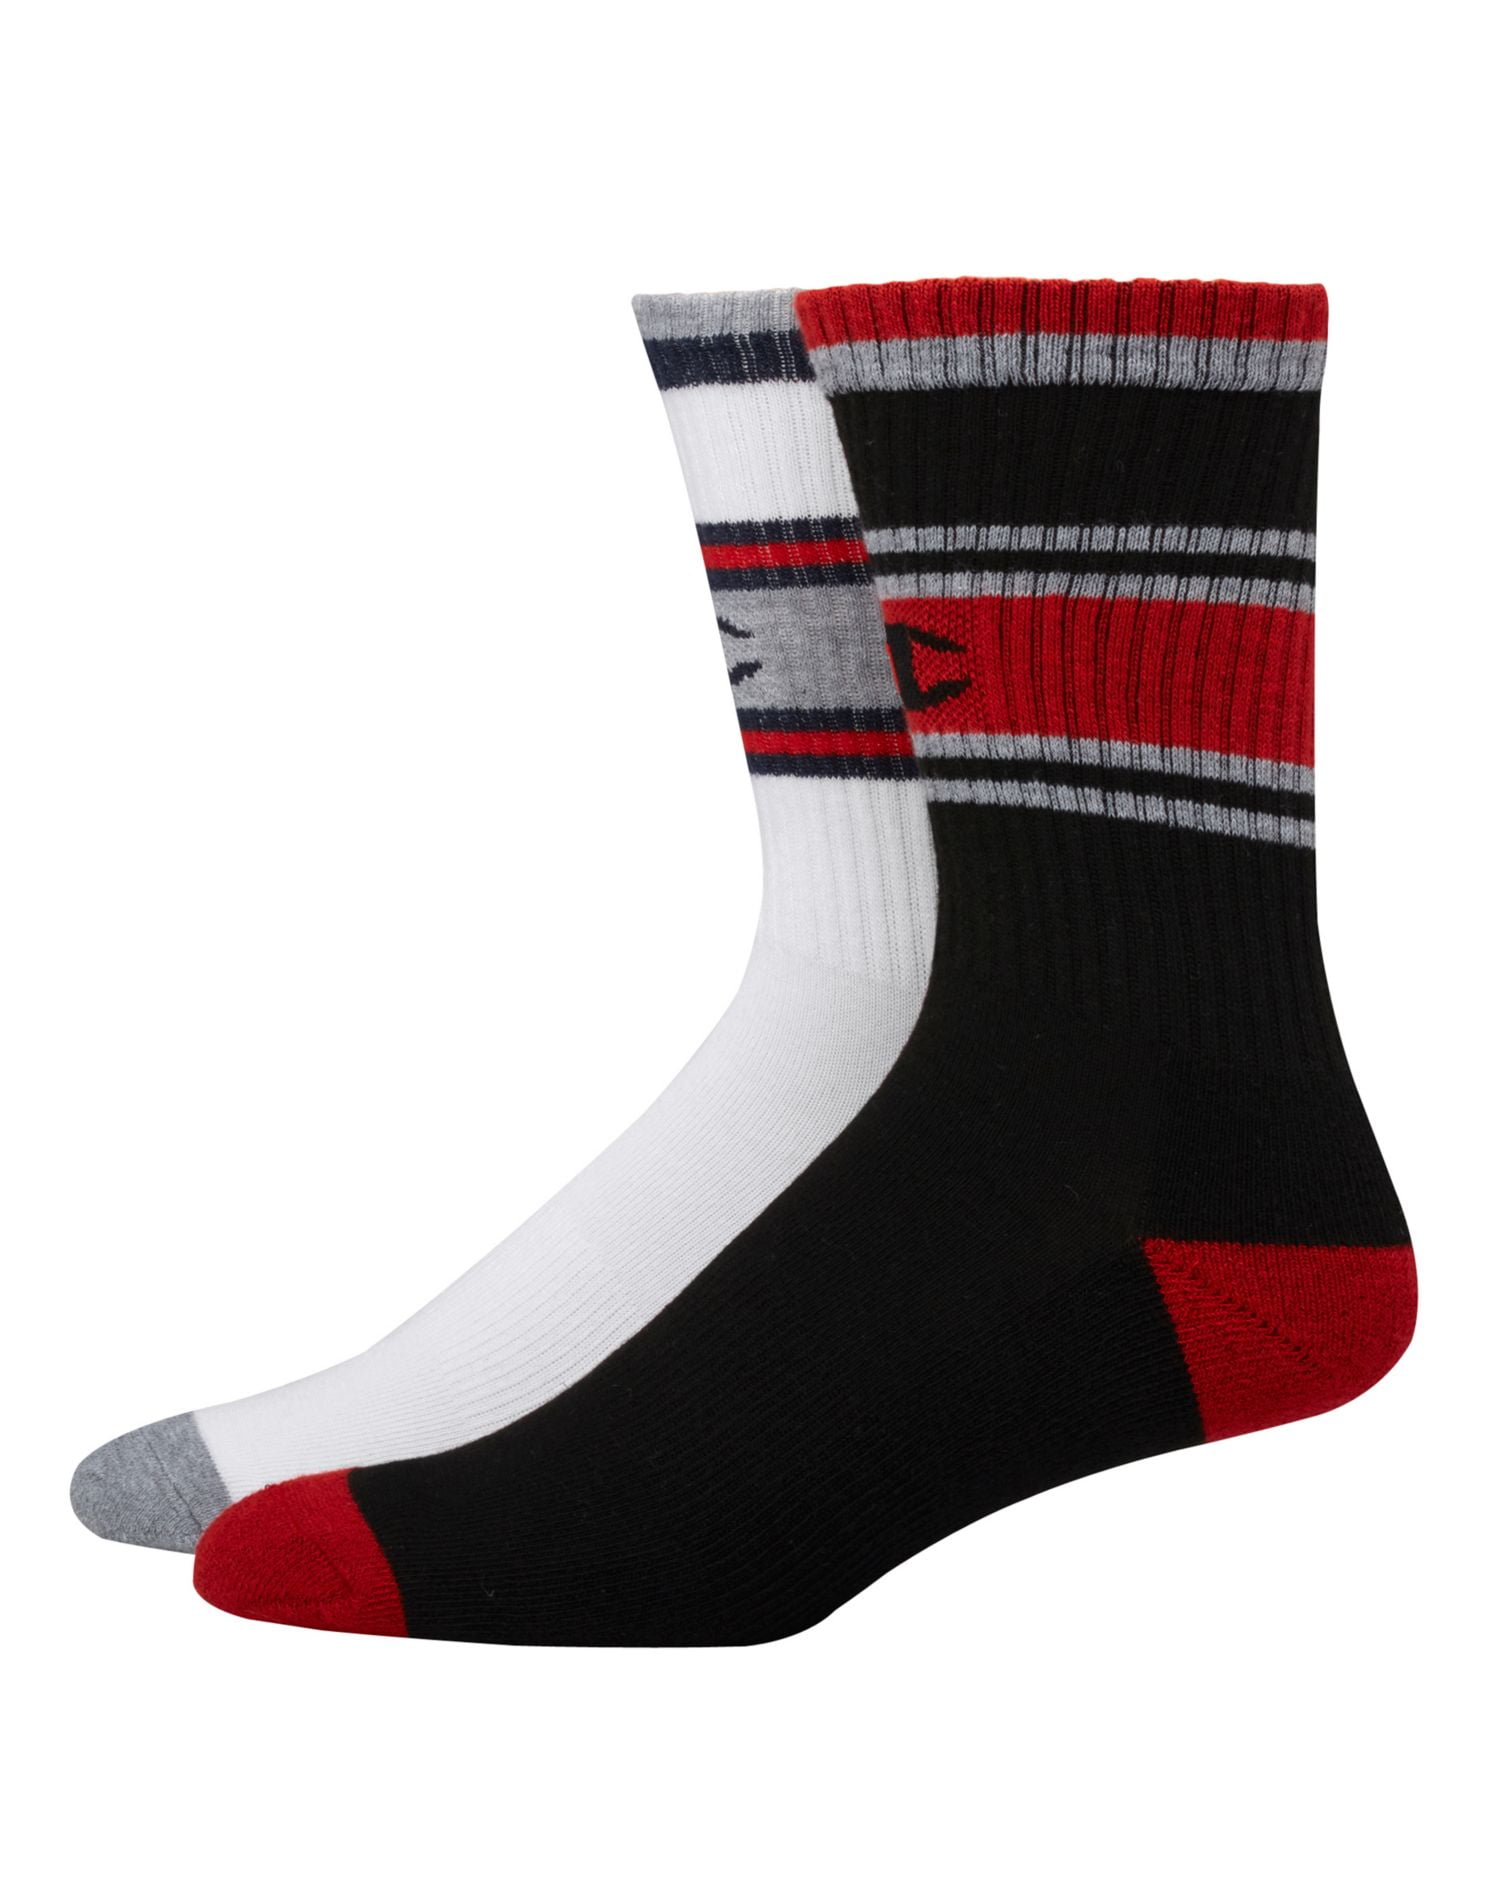 red champion socks